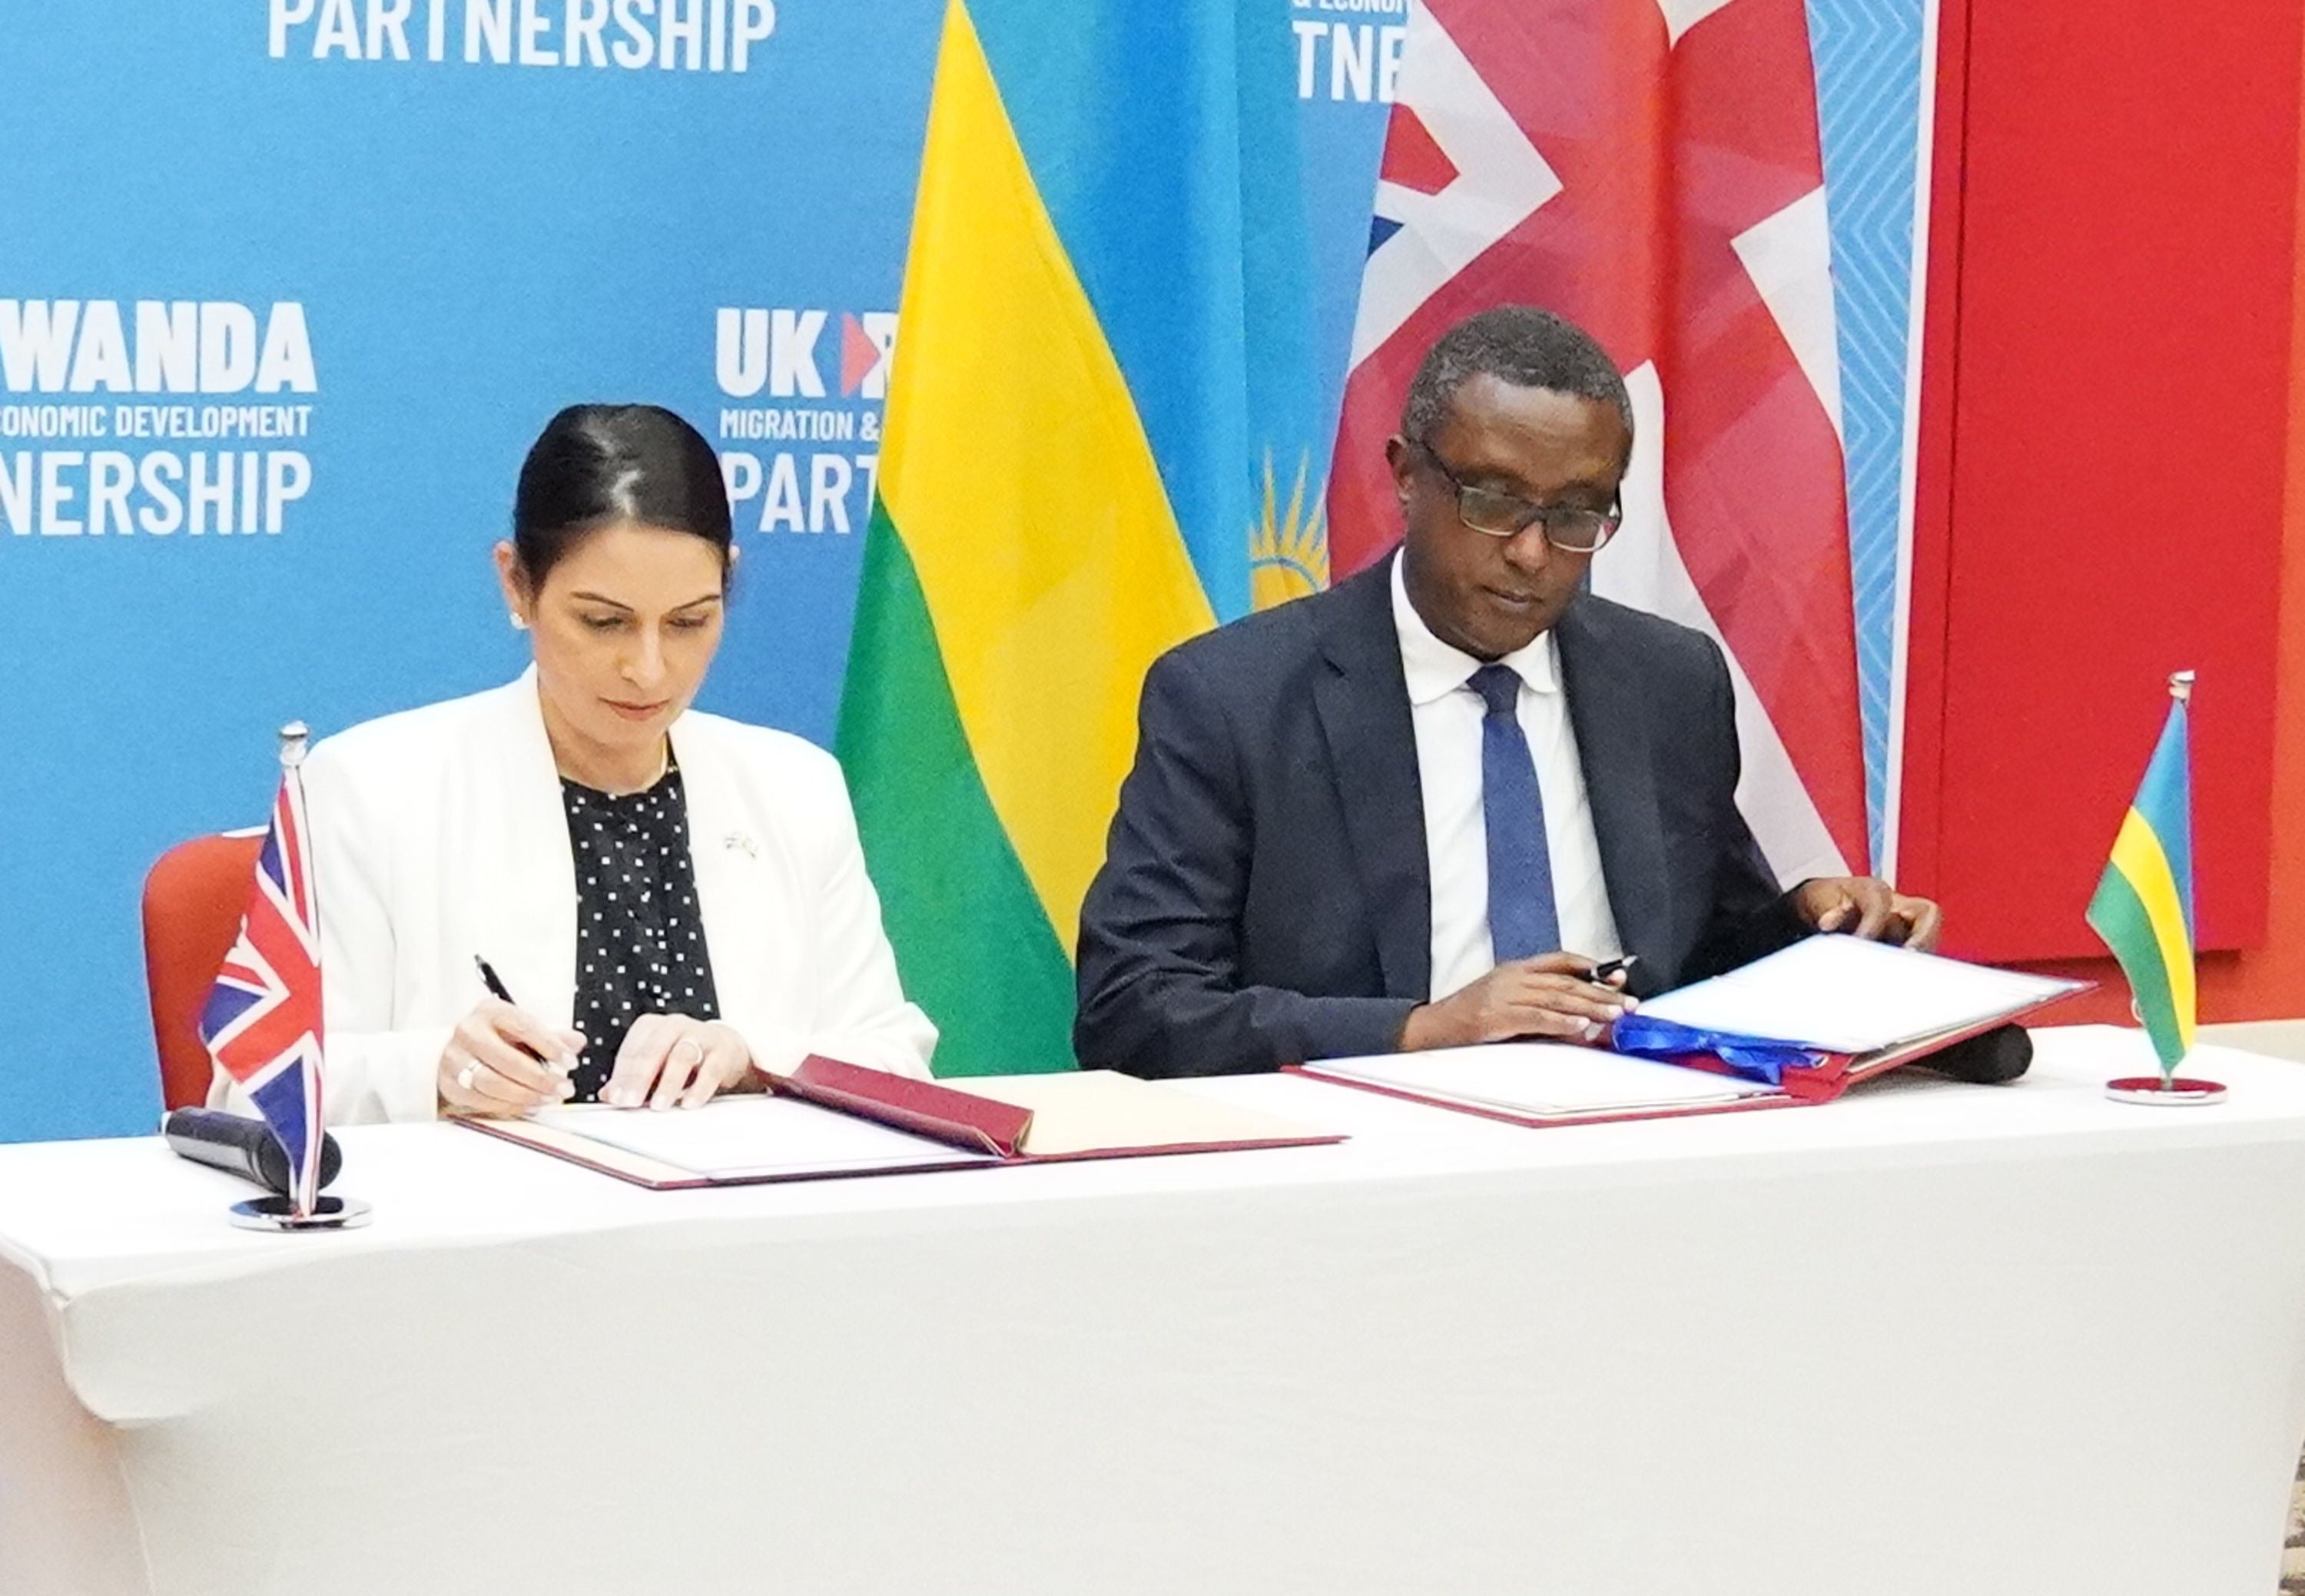 Home secretary Priti Patel and Rwandan minister Vincent Biruta signed a ‘world-first’ migration and economic development partnership